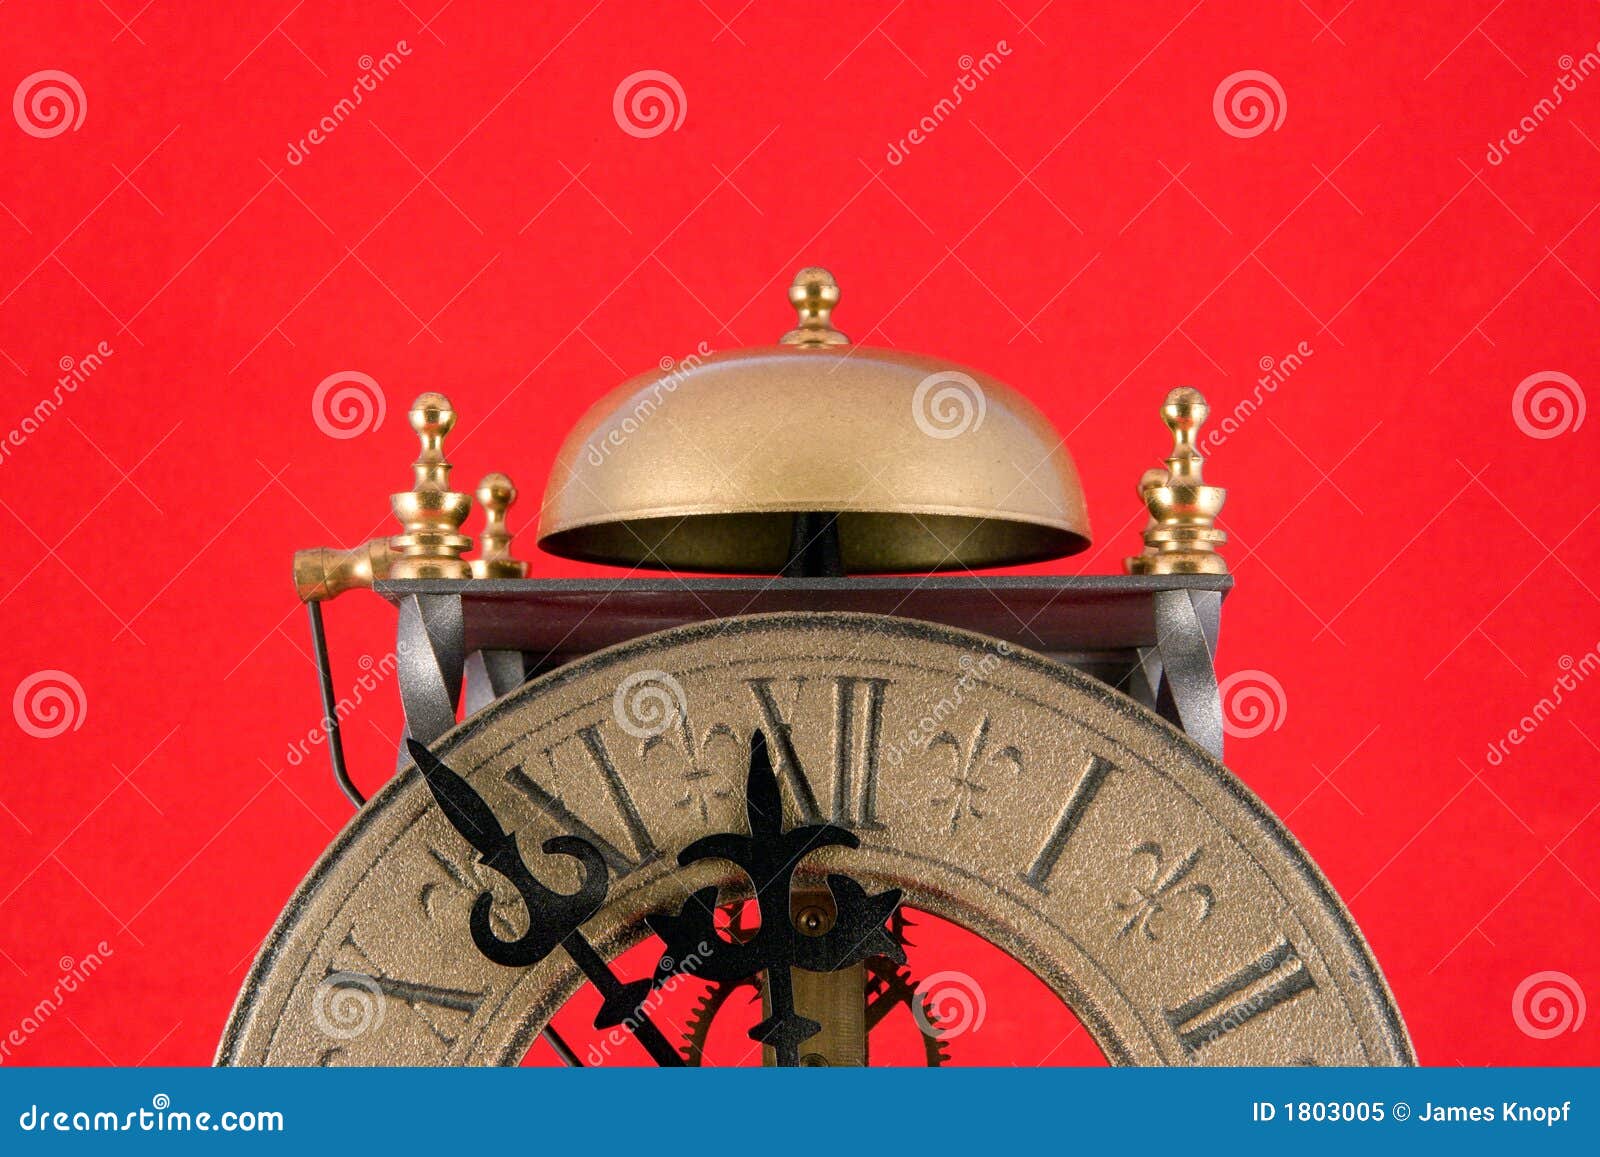 Doomsday Clock Royalty Free Stock Photo - Image: 18030051300 x 957